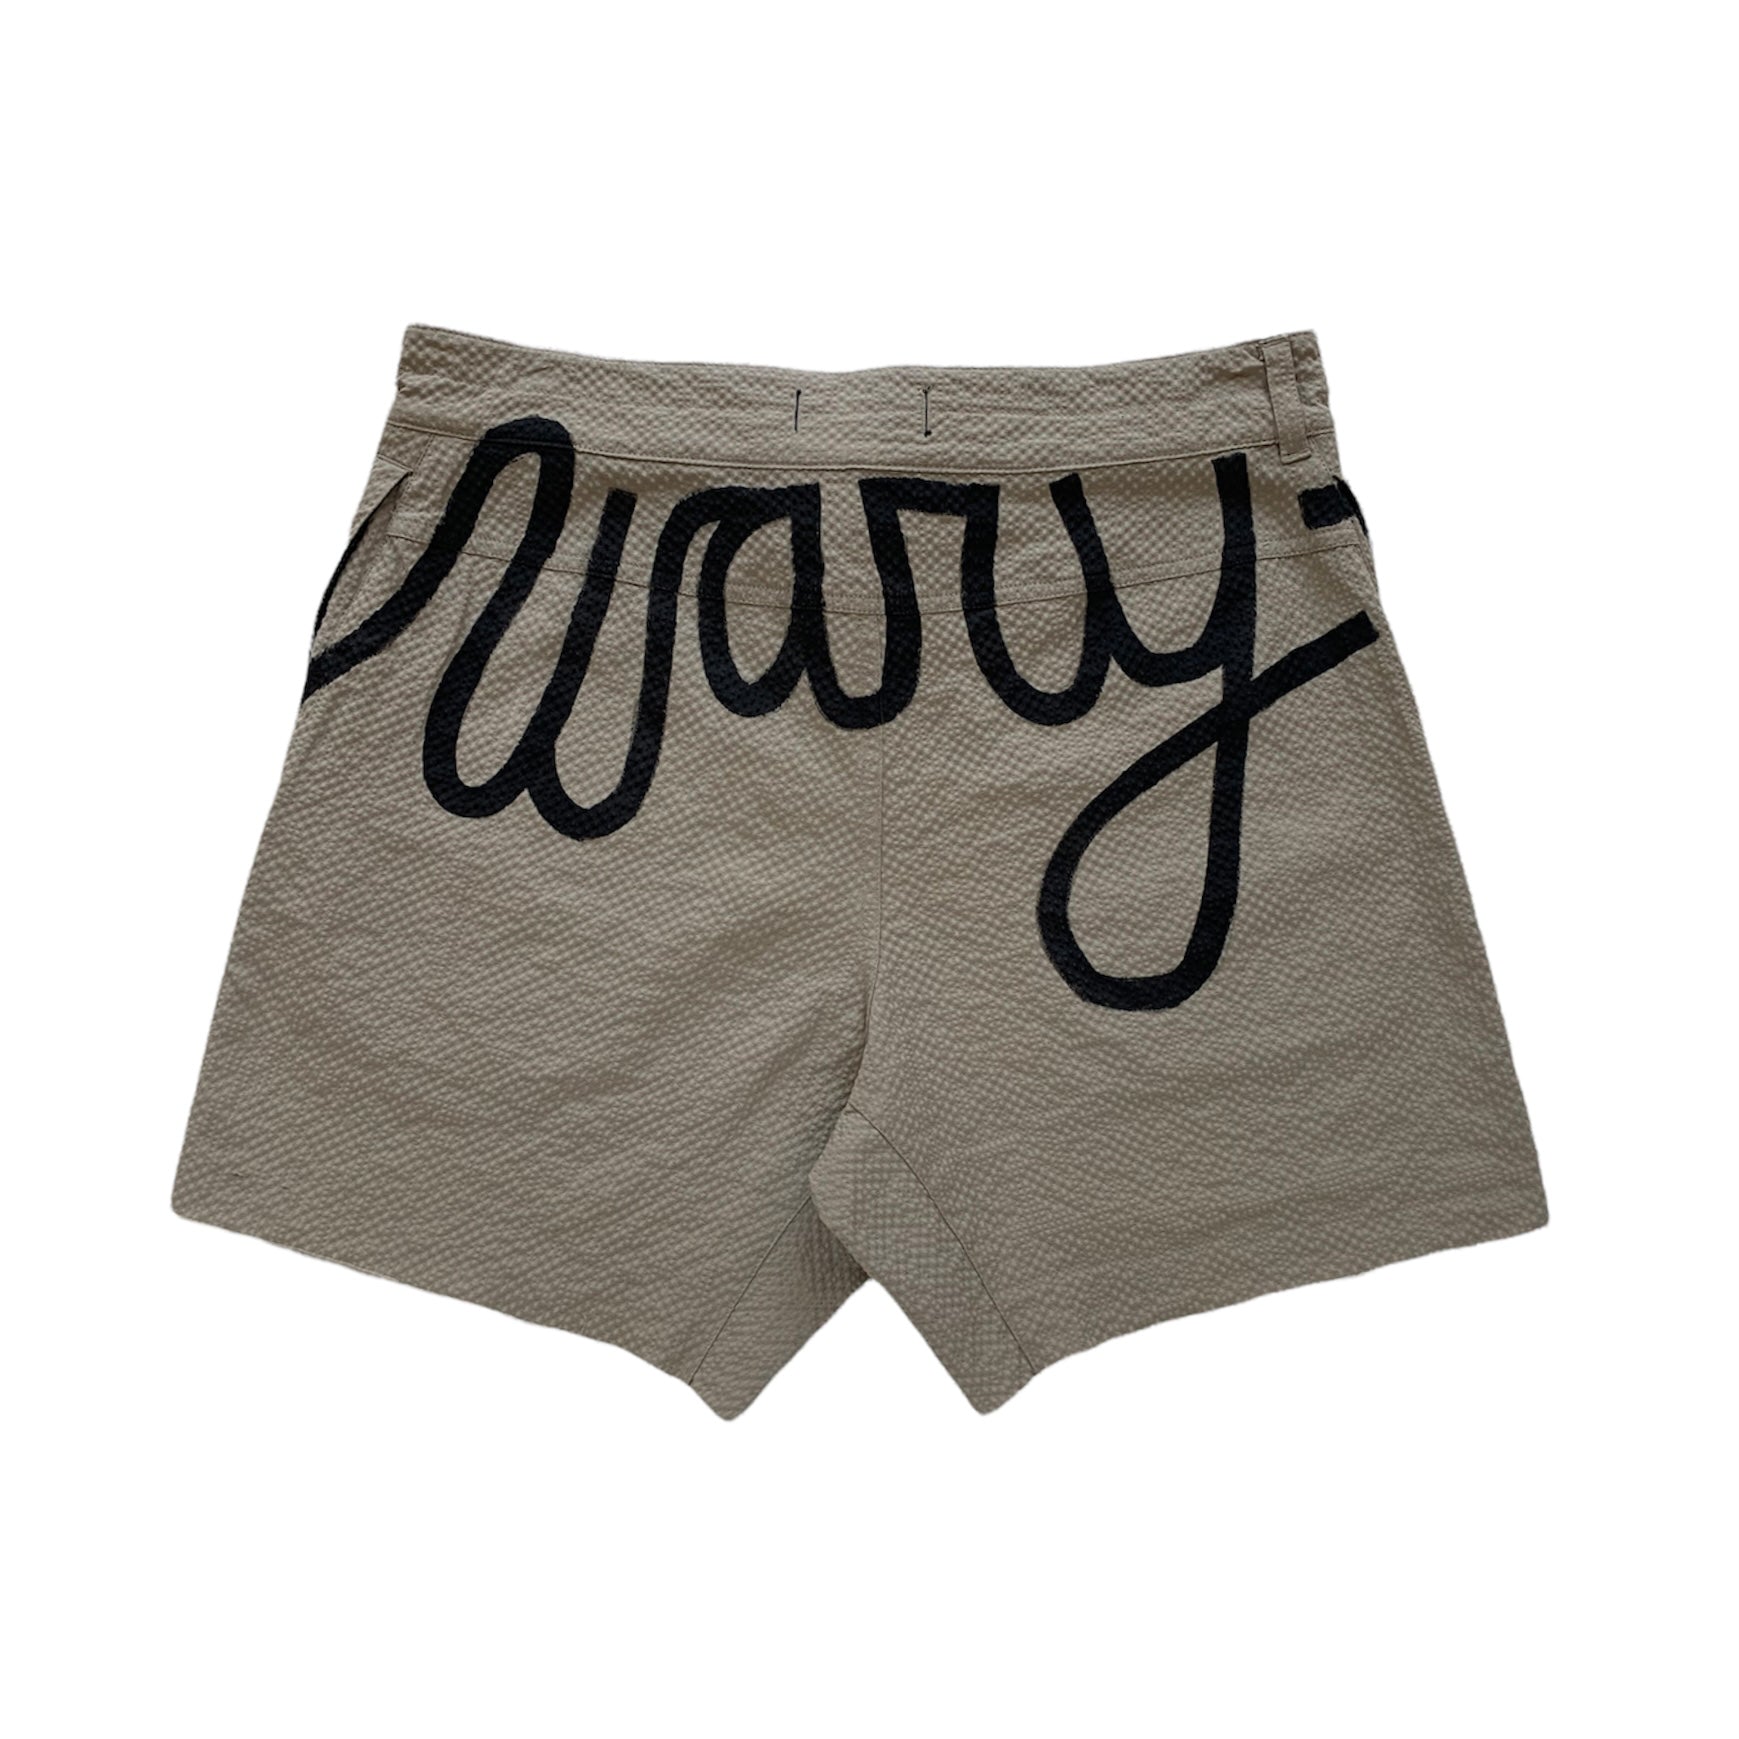 WEARY/WARY drawstring shorts